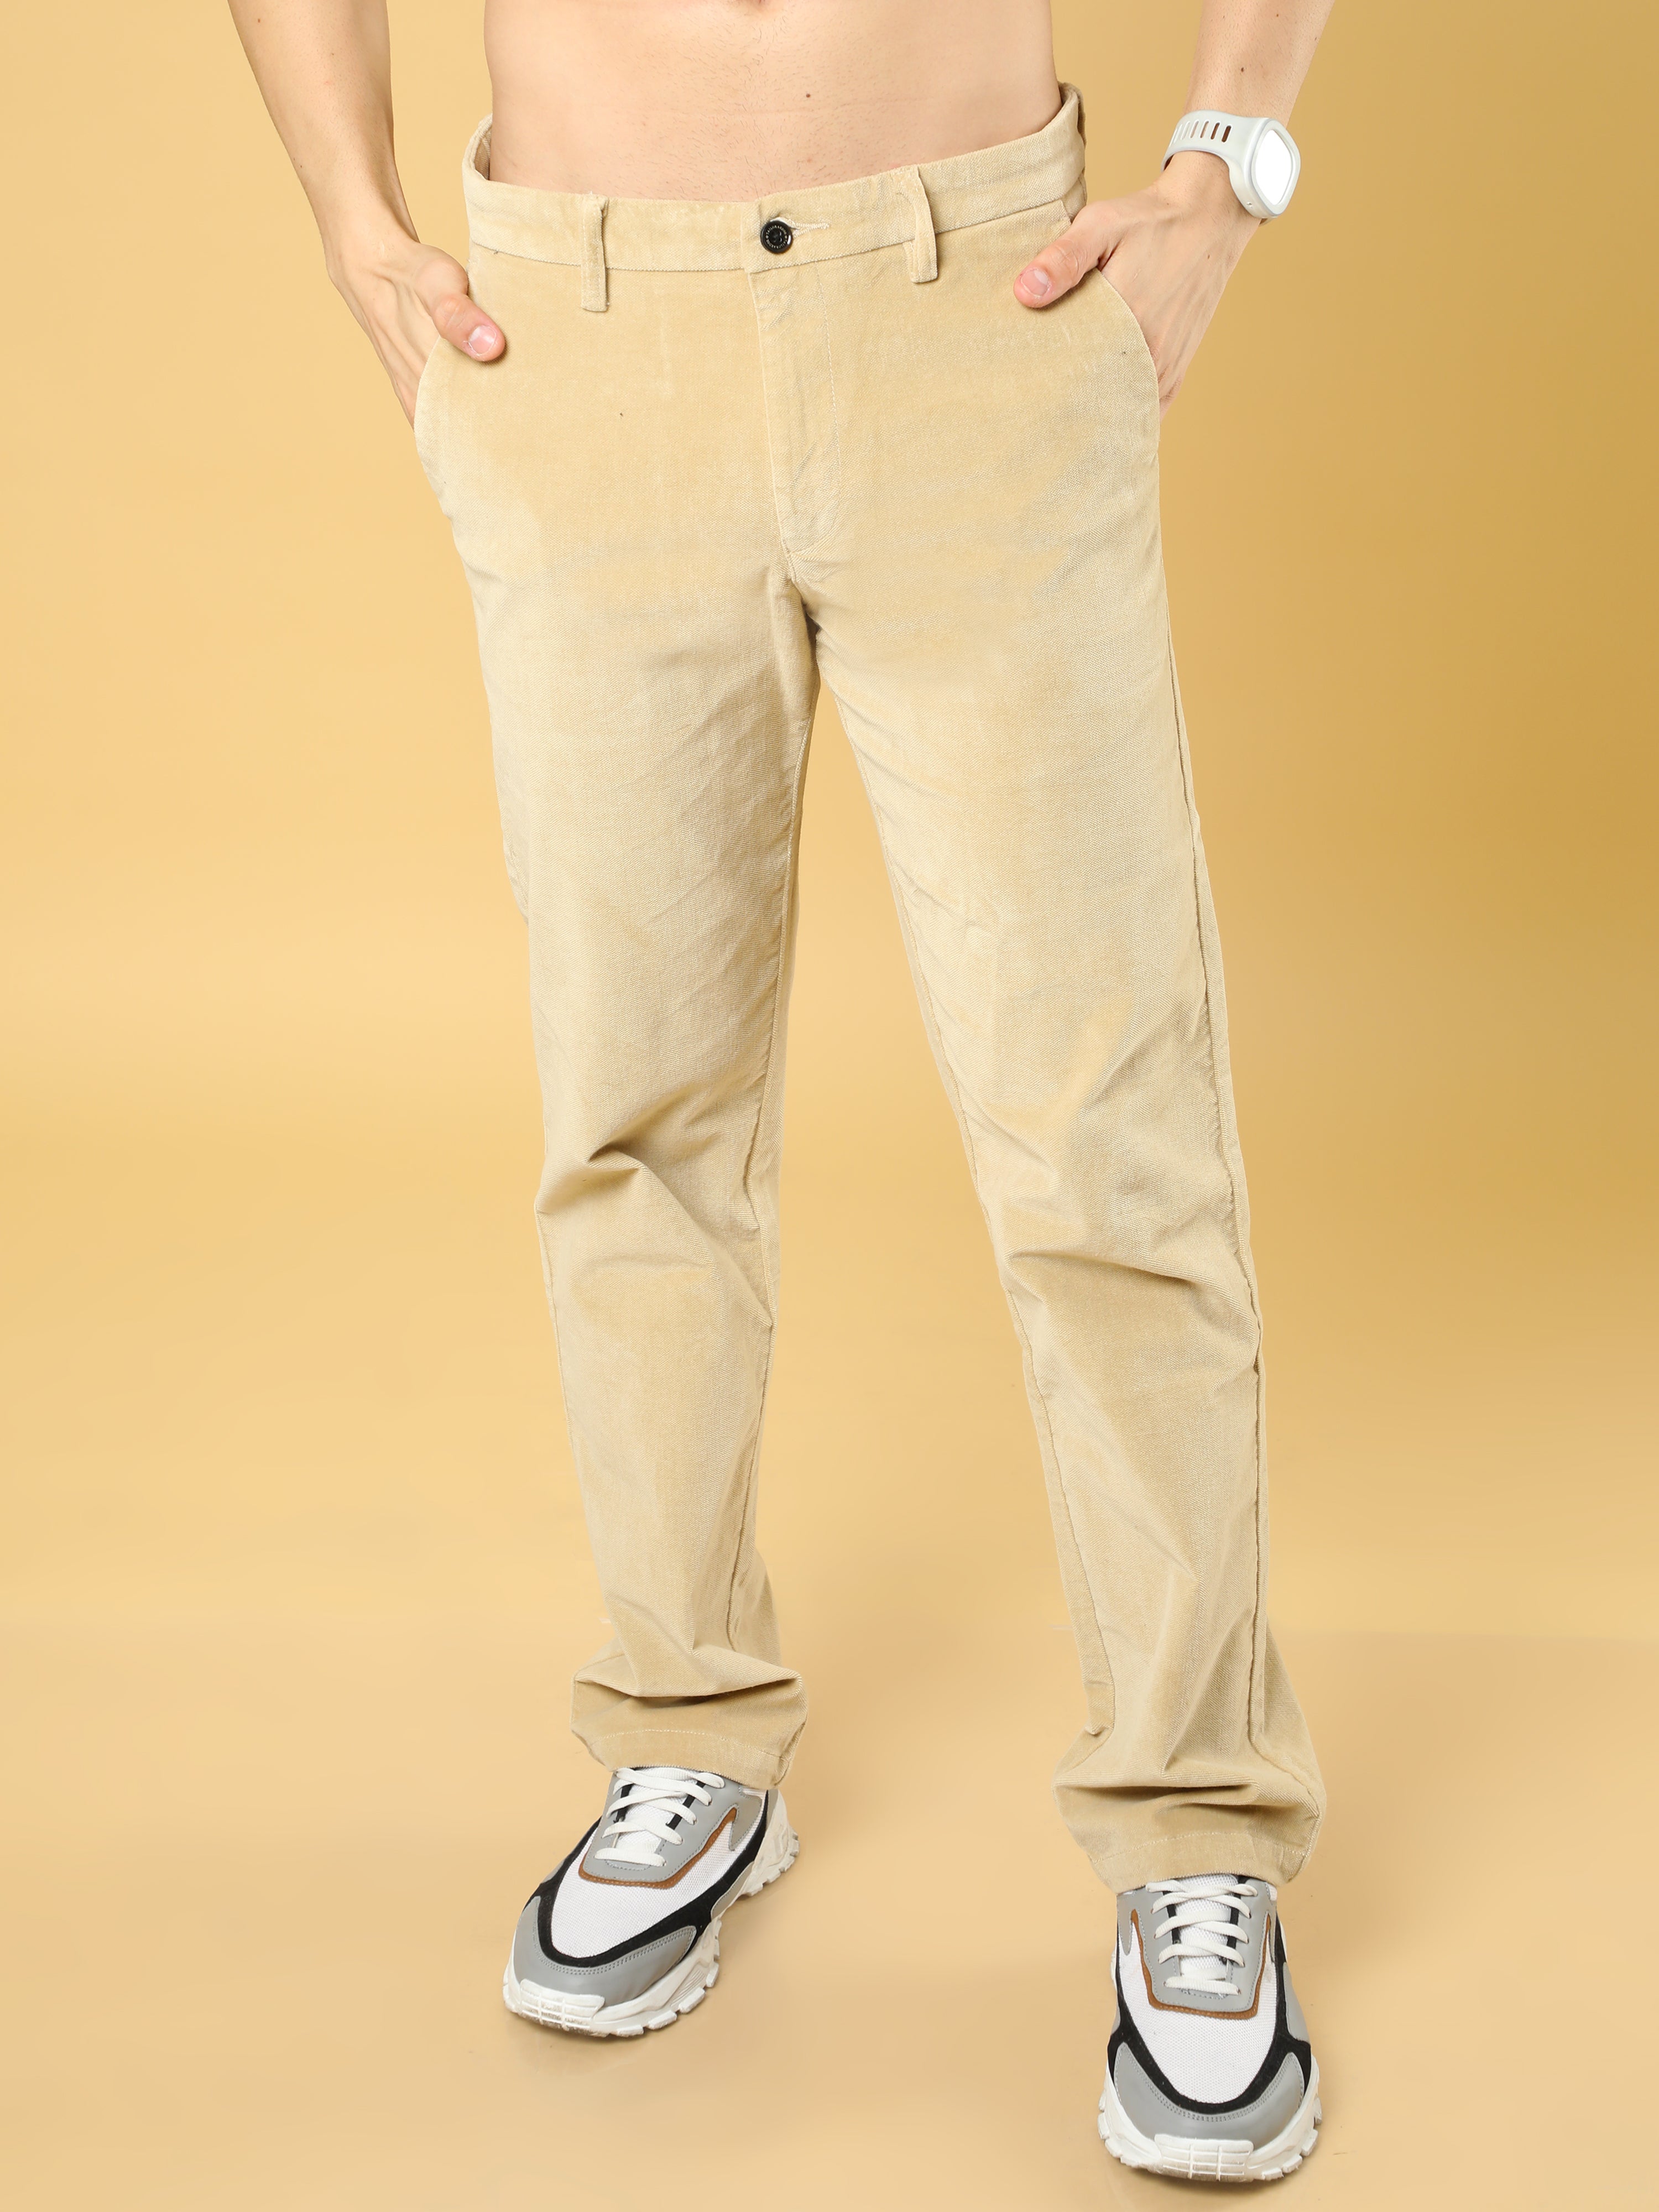 Corduroy Pants - Buy Corduroy Pants online at Best Prices in India |  Flipkart.com